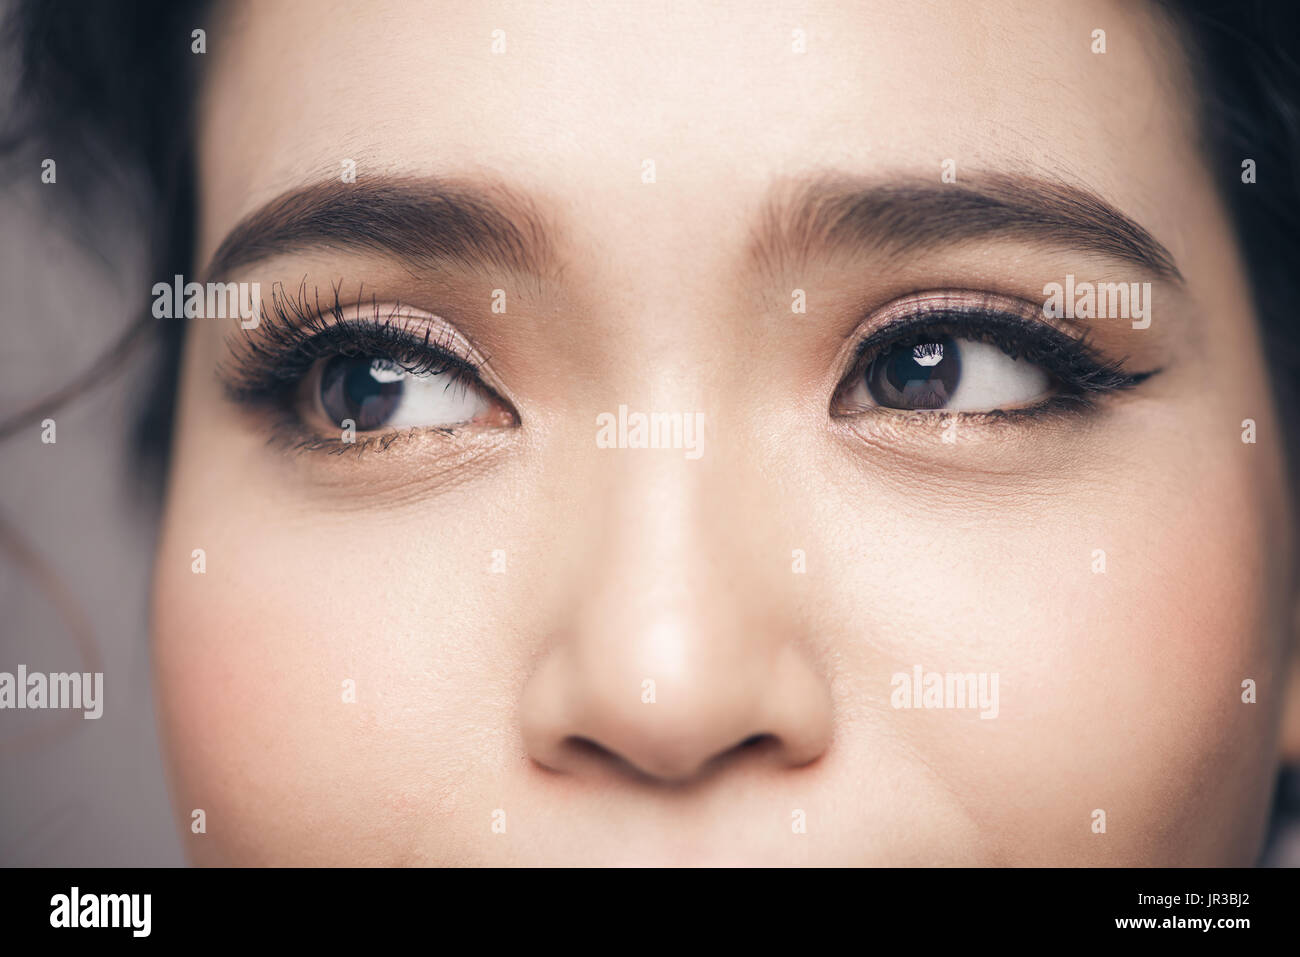 Asian model eye close-up with long eyelashes. Selective focus Stock Photo